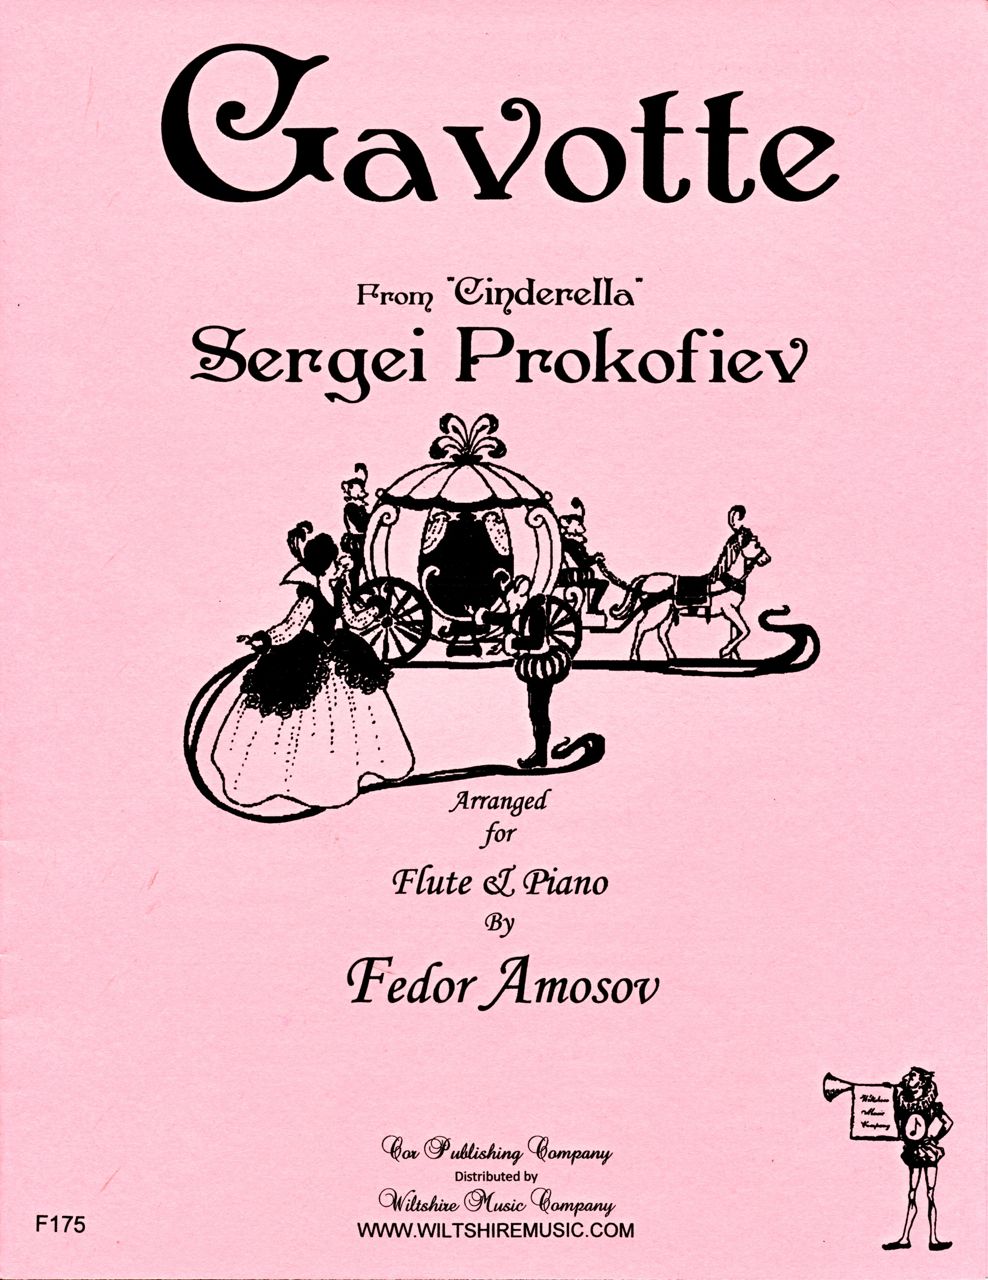 Gavotte from Cinderella, S. Prokovfiev arr. Amosov, flute & pian